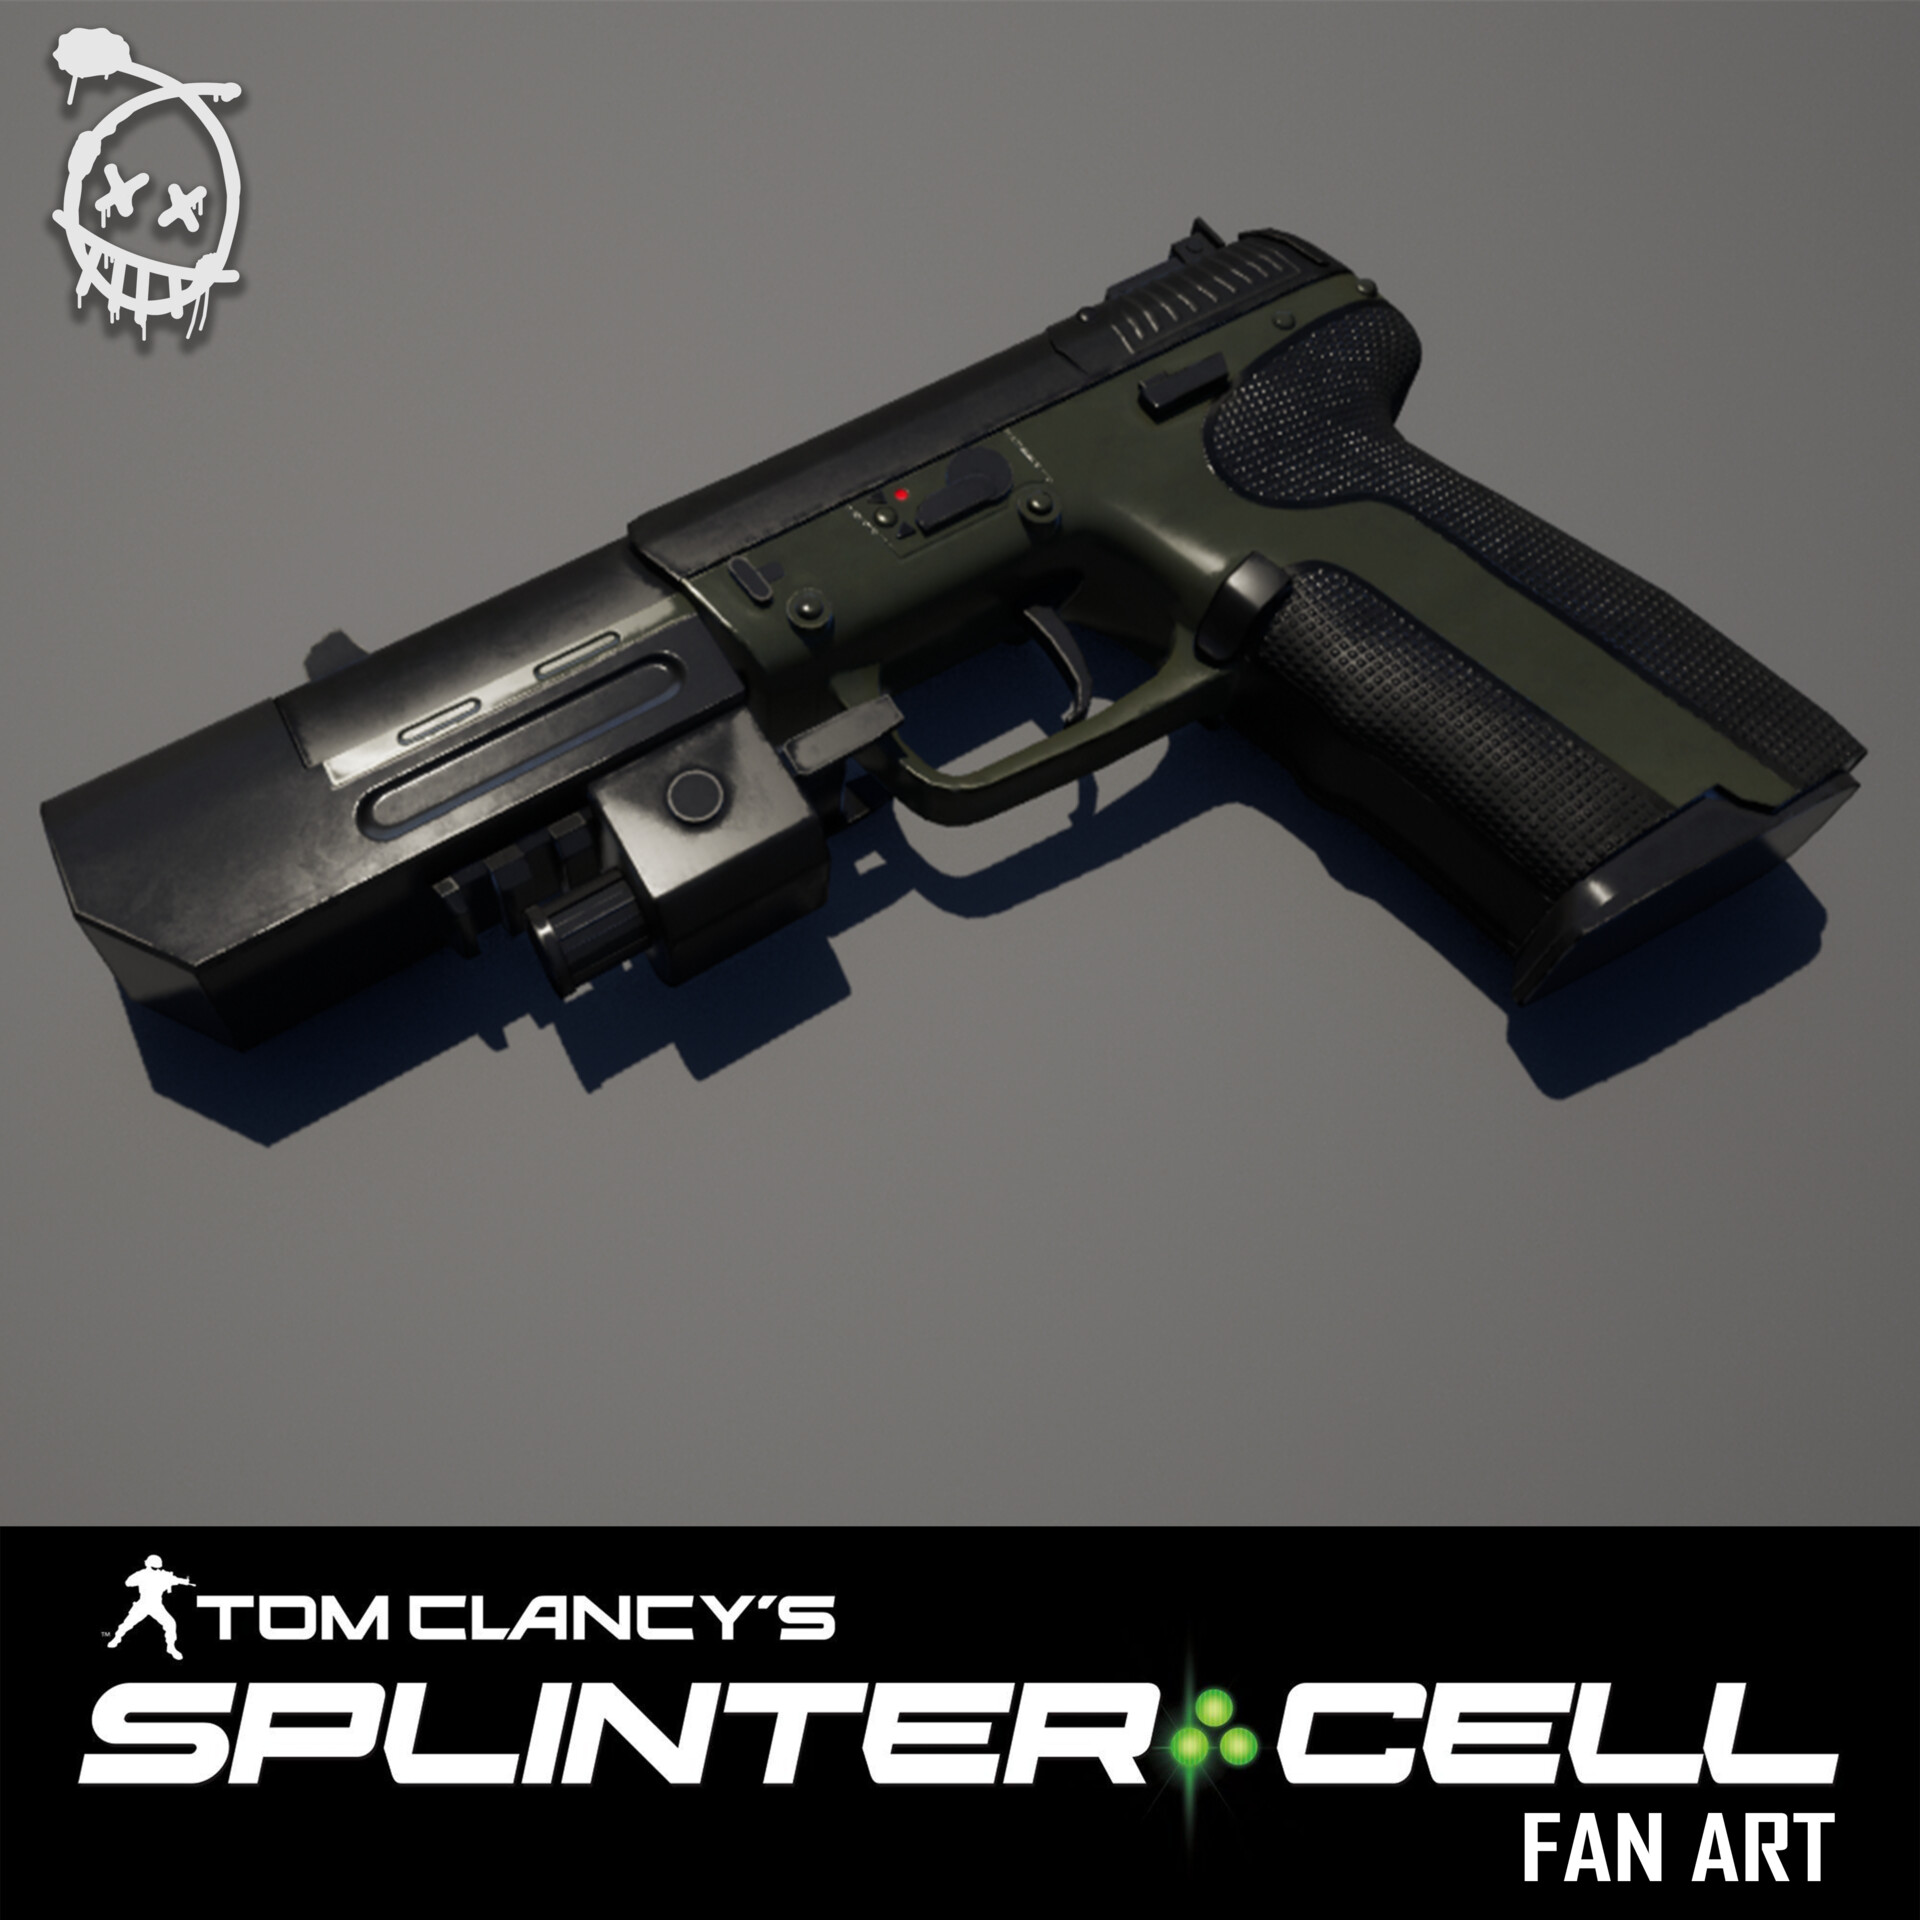 Splinter Cell Blacklist - All Weapons Showcase 